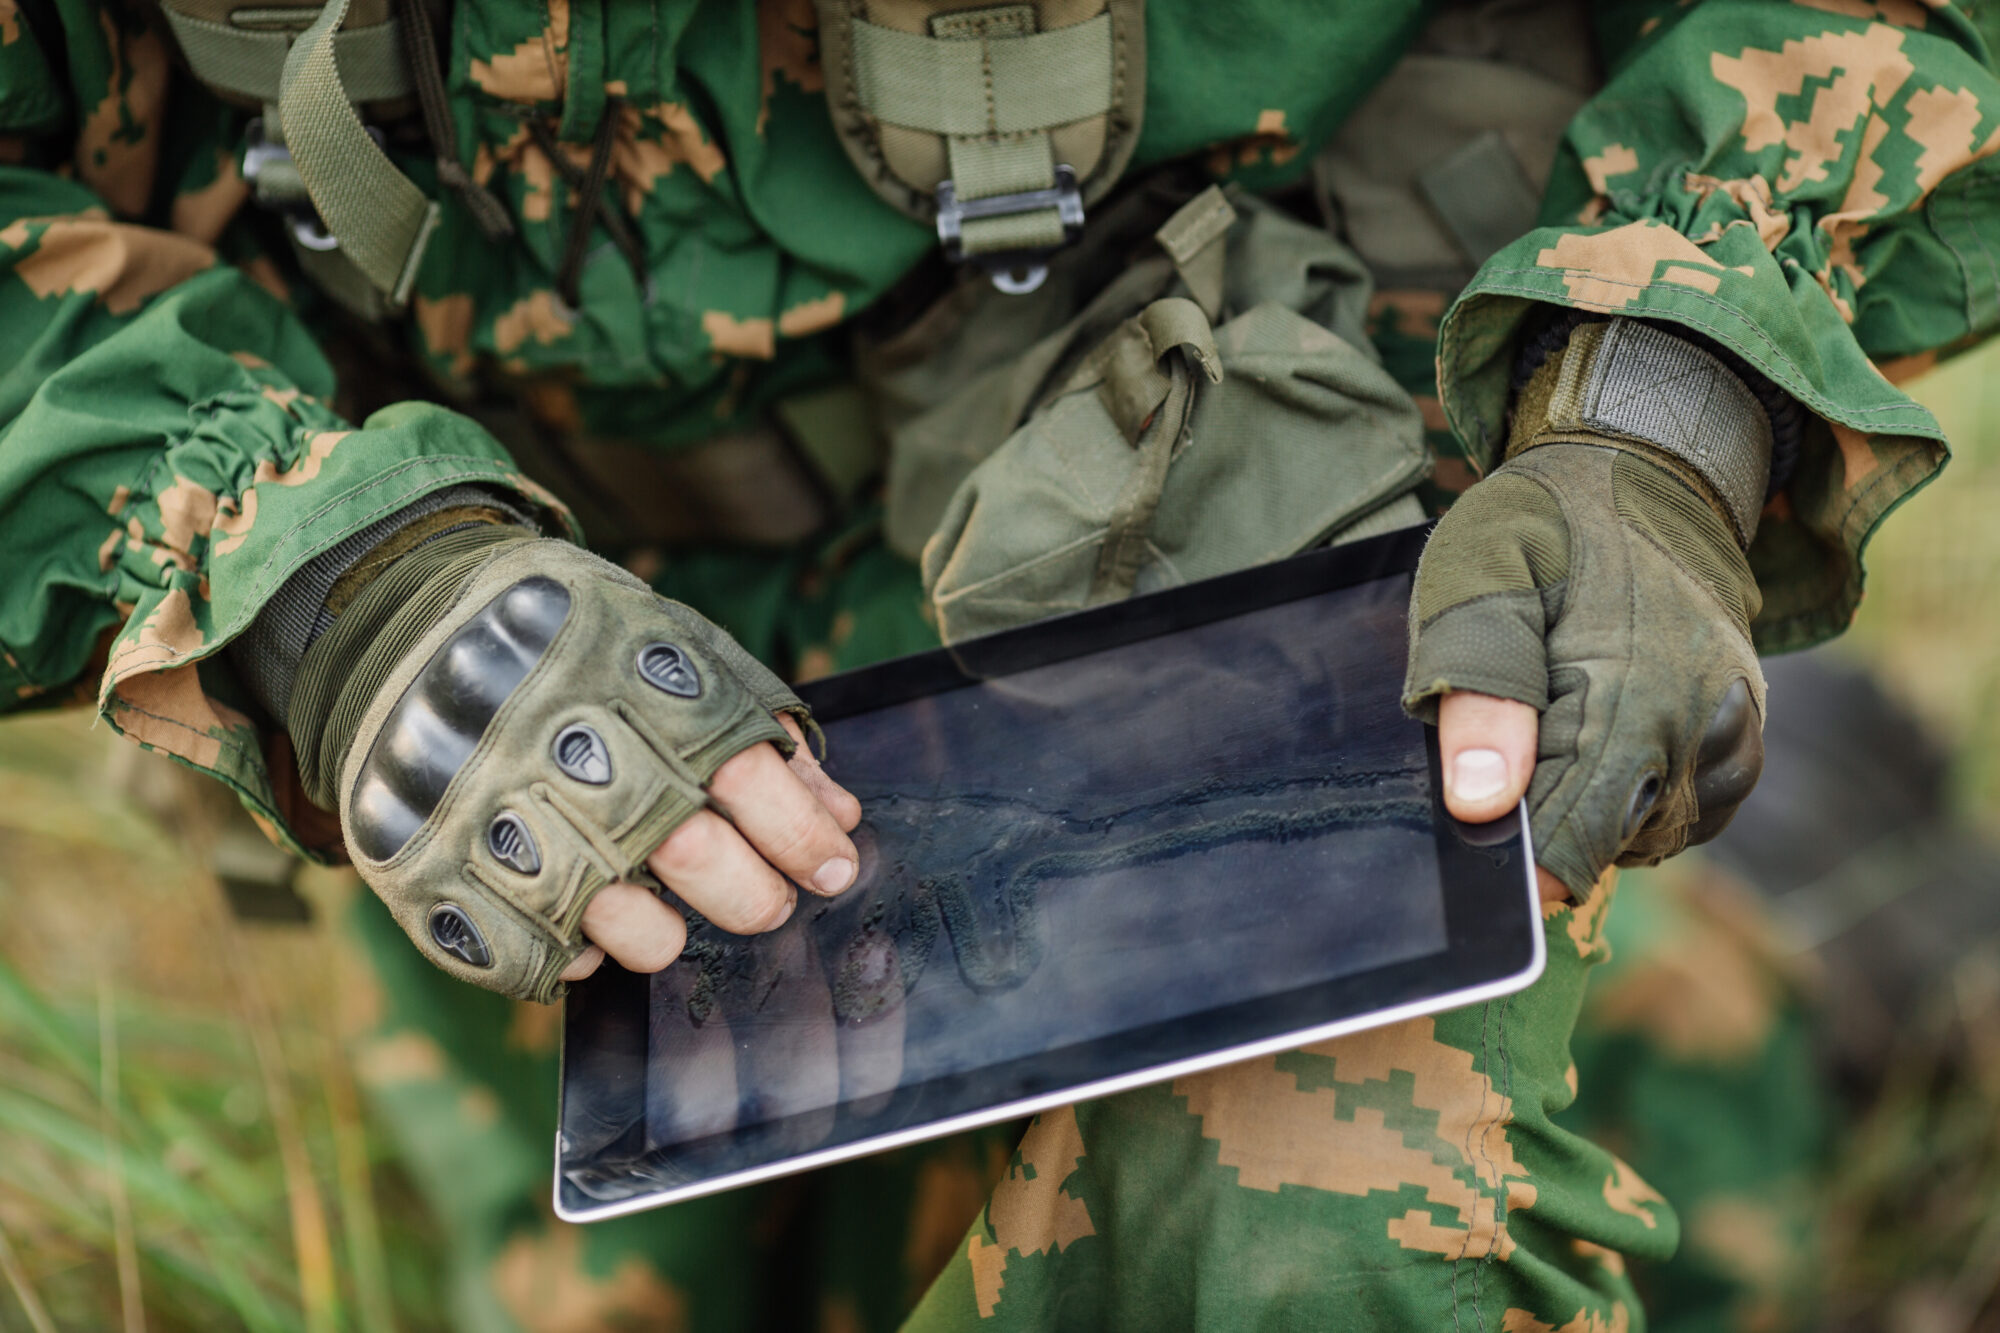 AR technologies in Military Maintenance